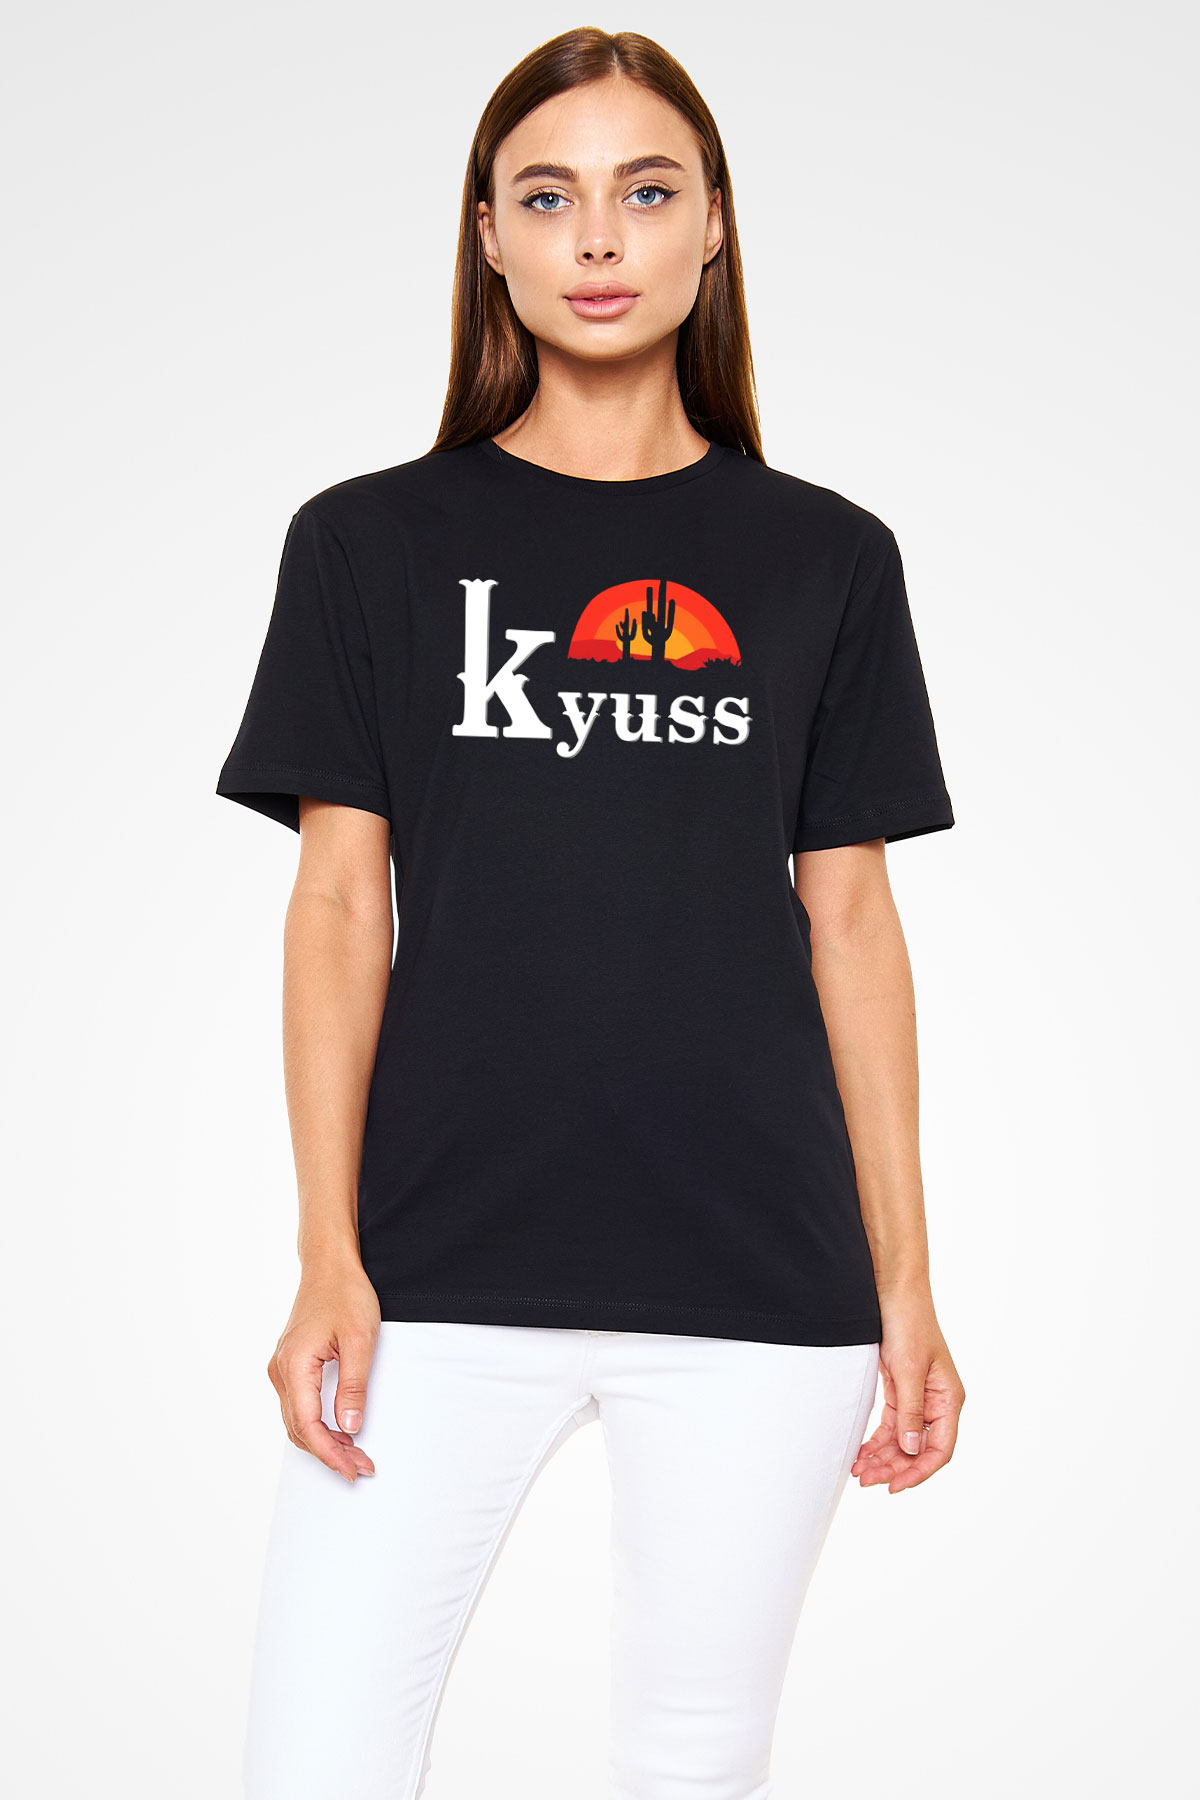 lawyer Gentleman friendly Manage Kyuss Black Unisex T-Shirt - Tees - Shirts